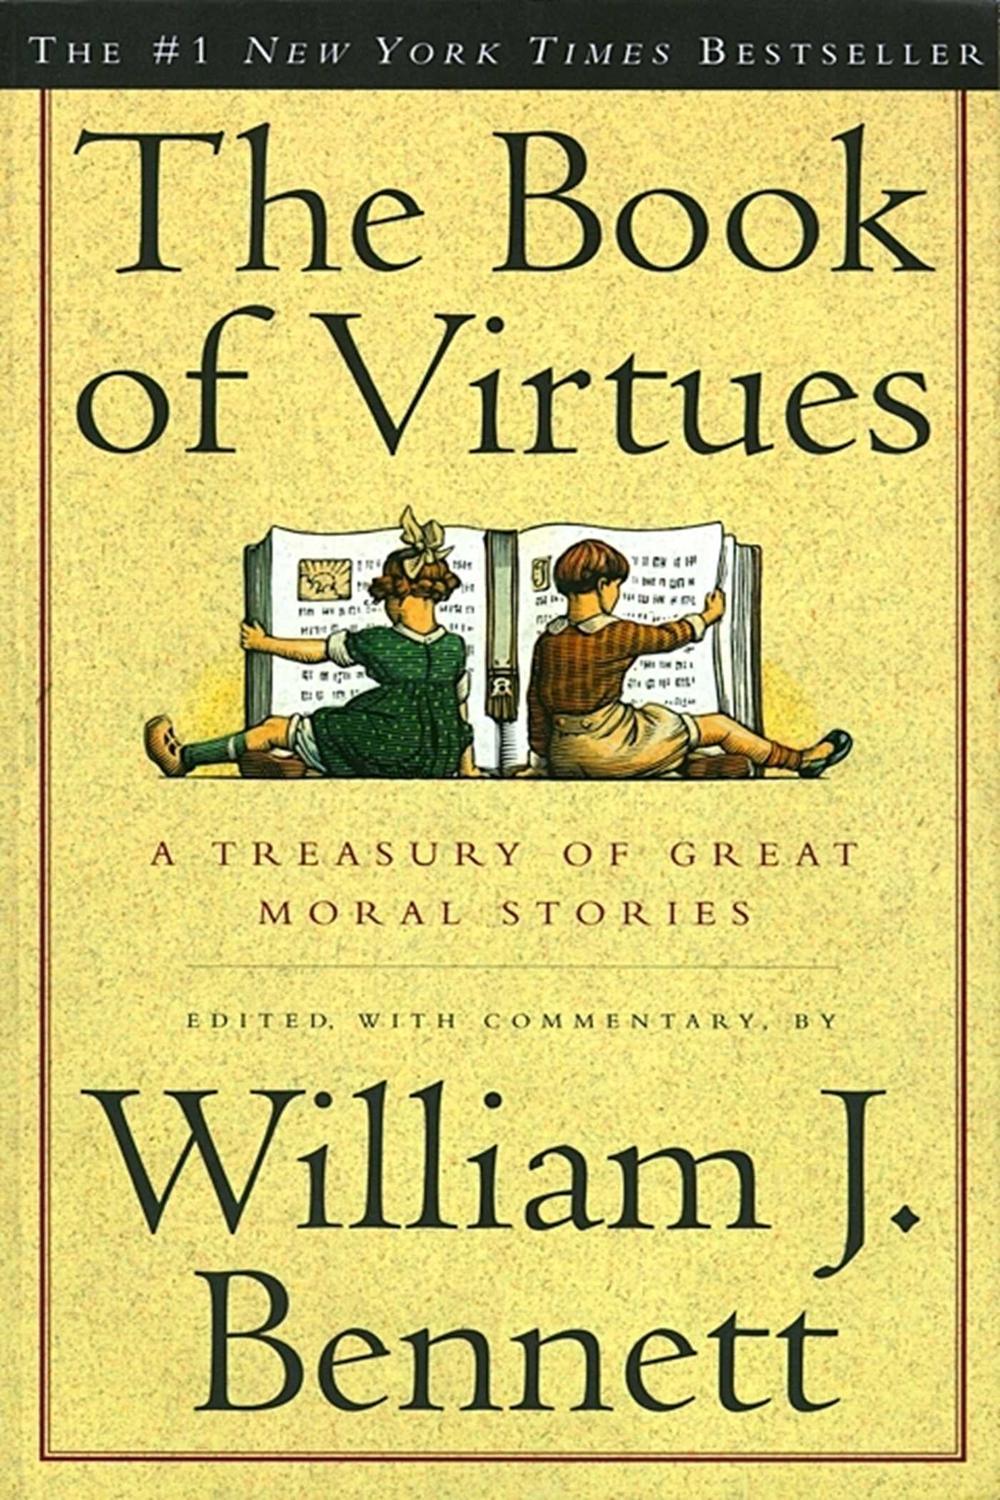 The Book of Virtues - William J. Bennett